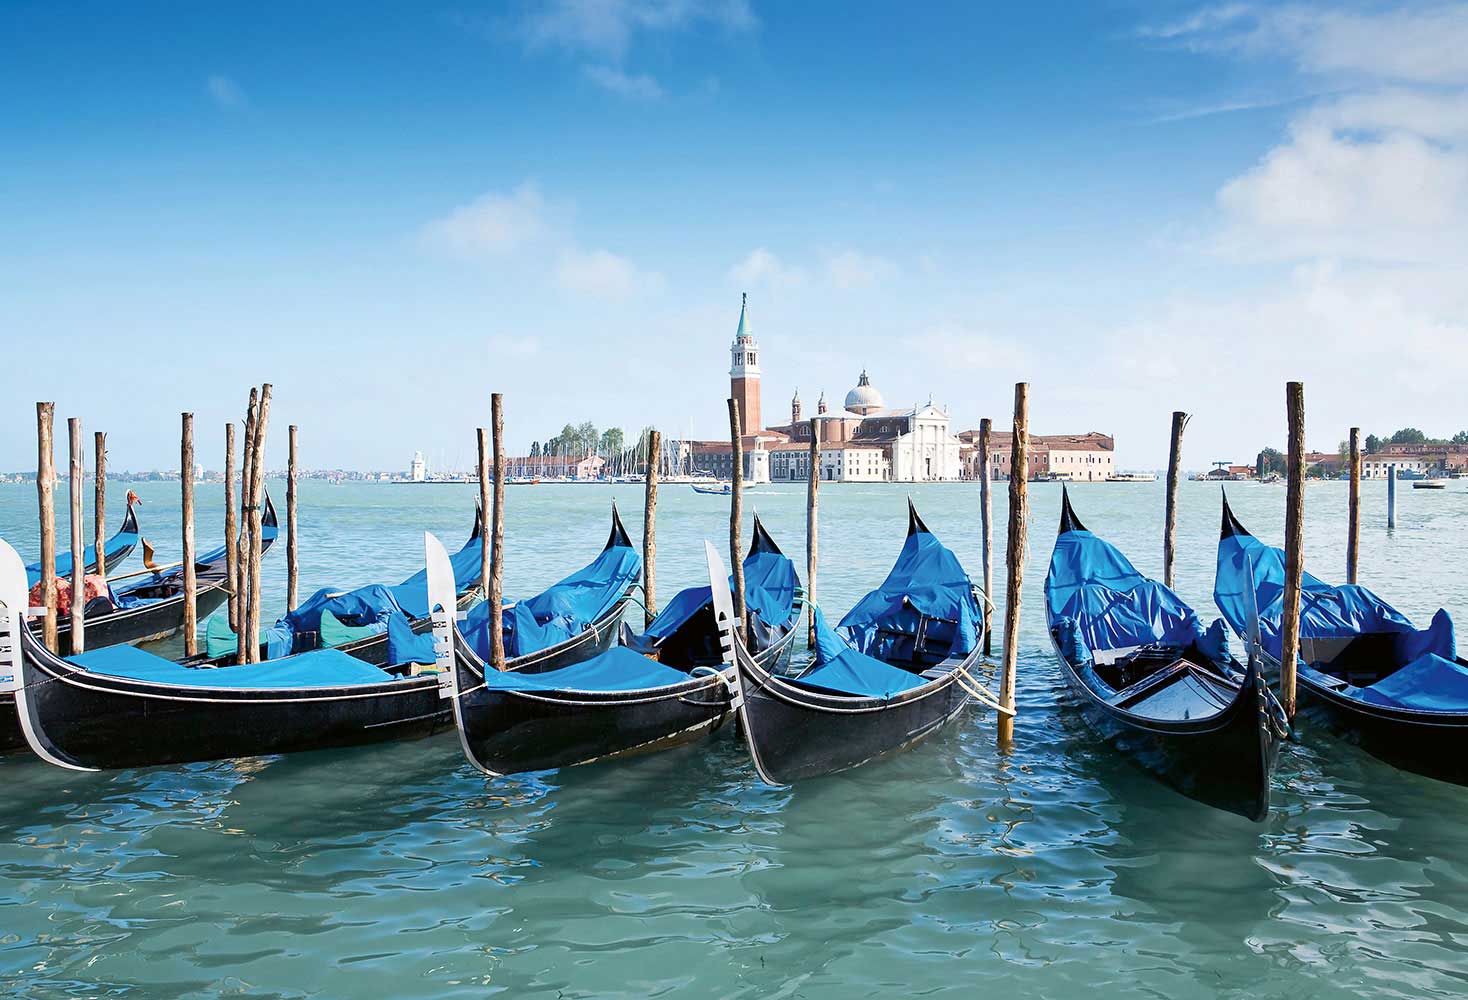 Fototapete kaufen online Gondolas in Venice Gondeln in Venedig WG